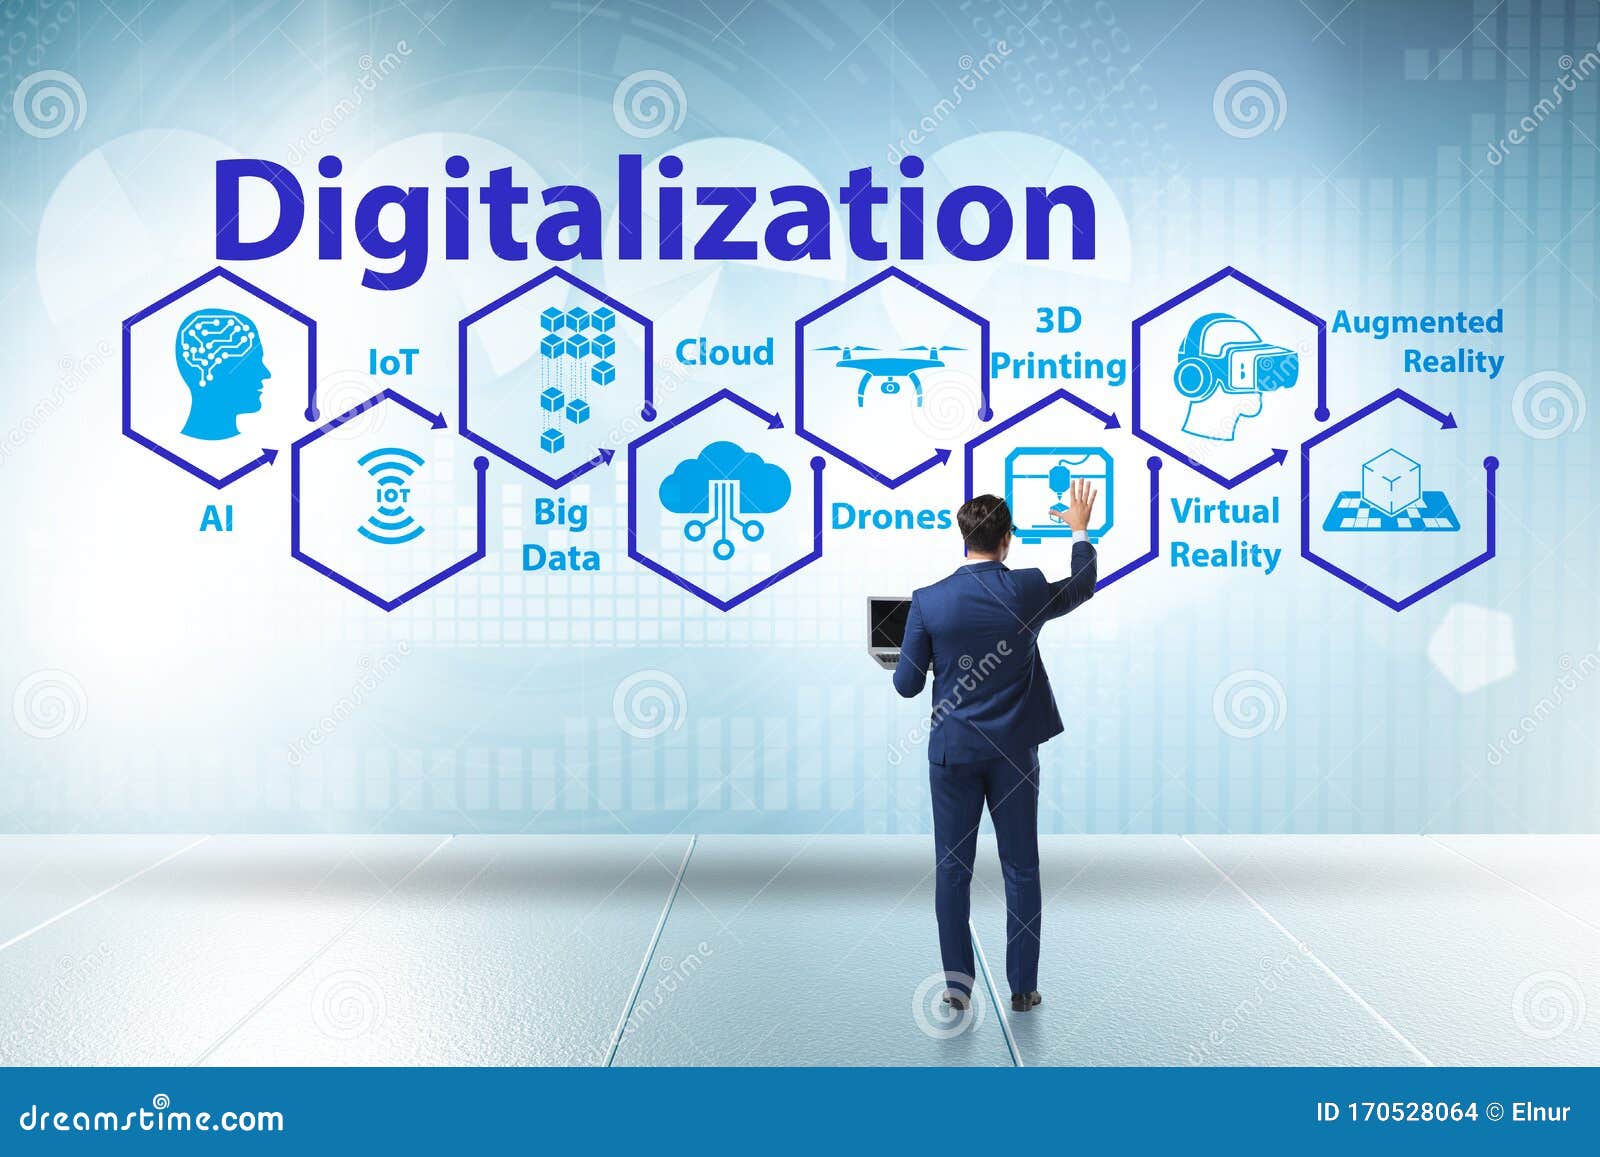 digital transformation and digitalization technology concept